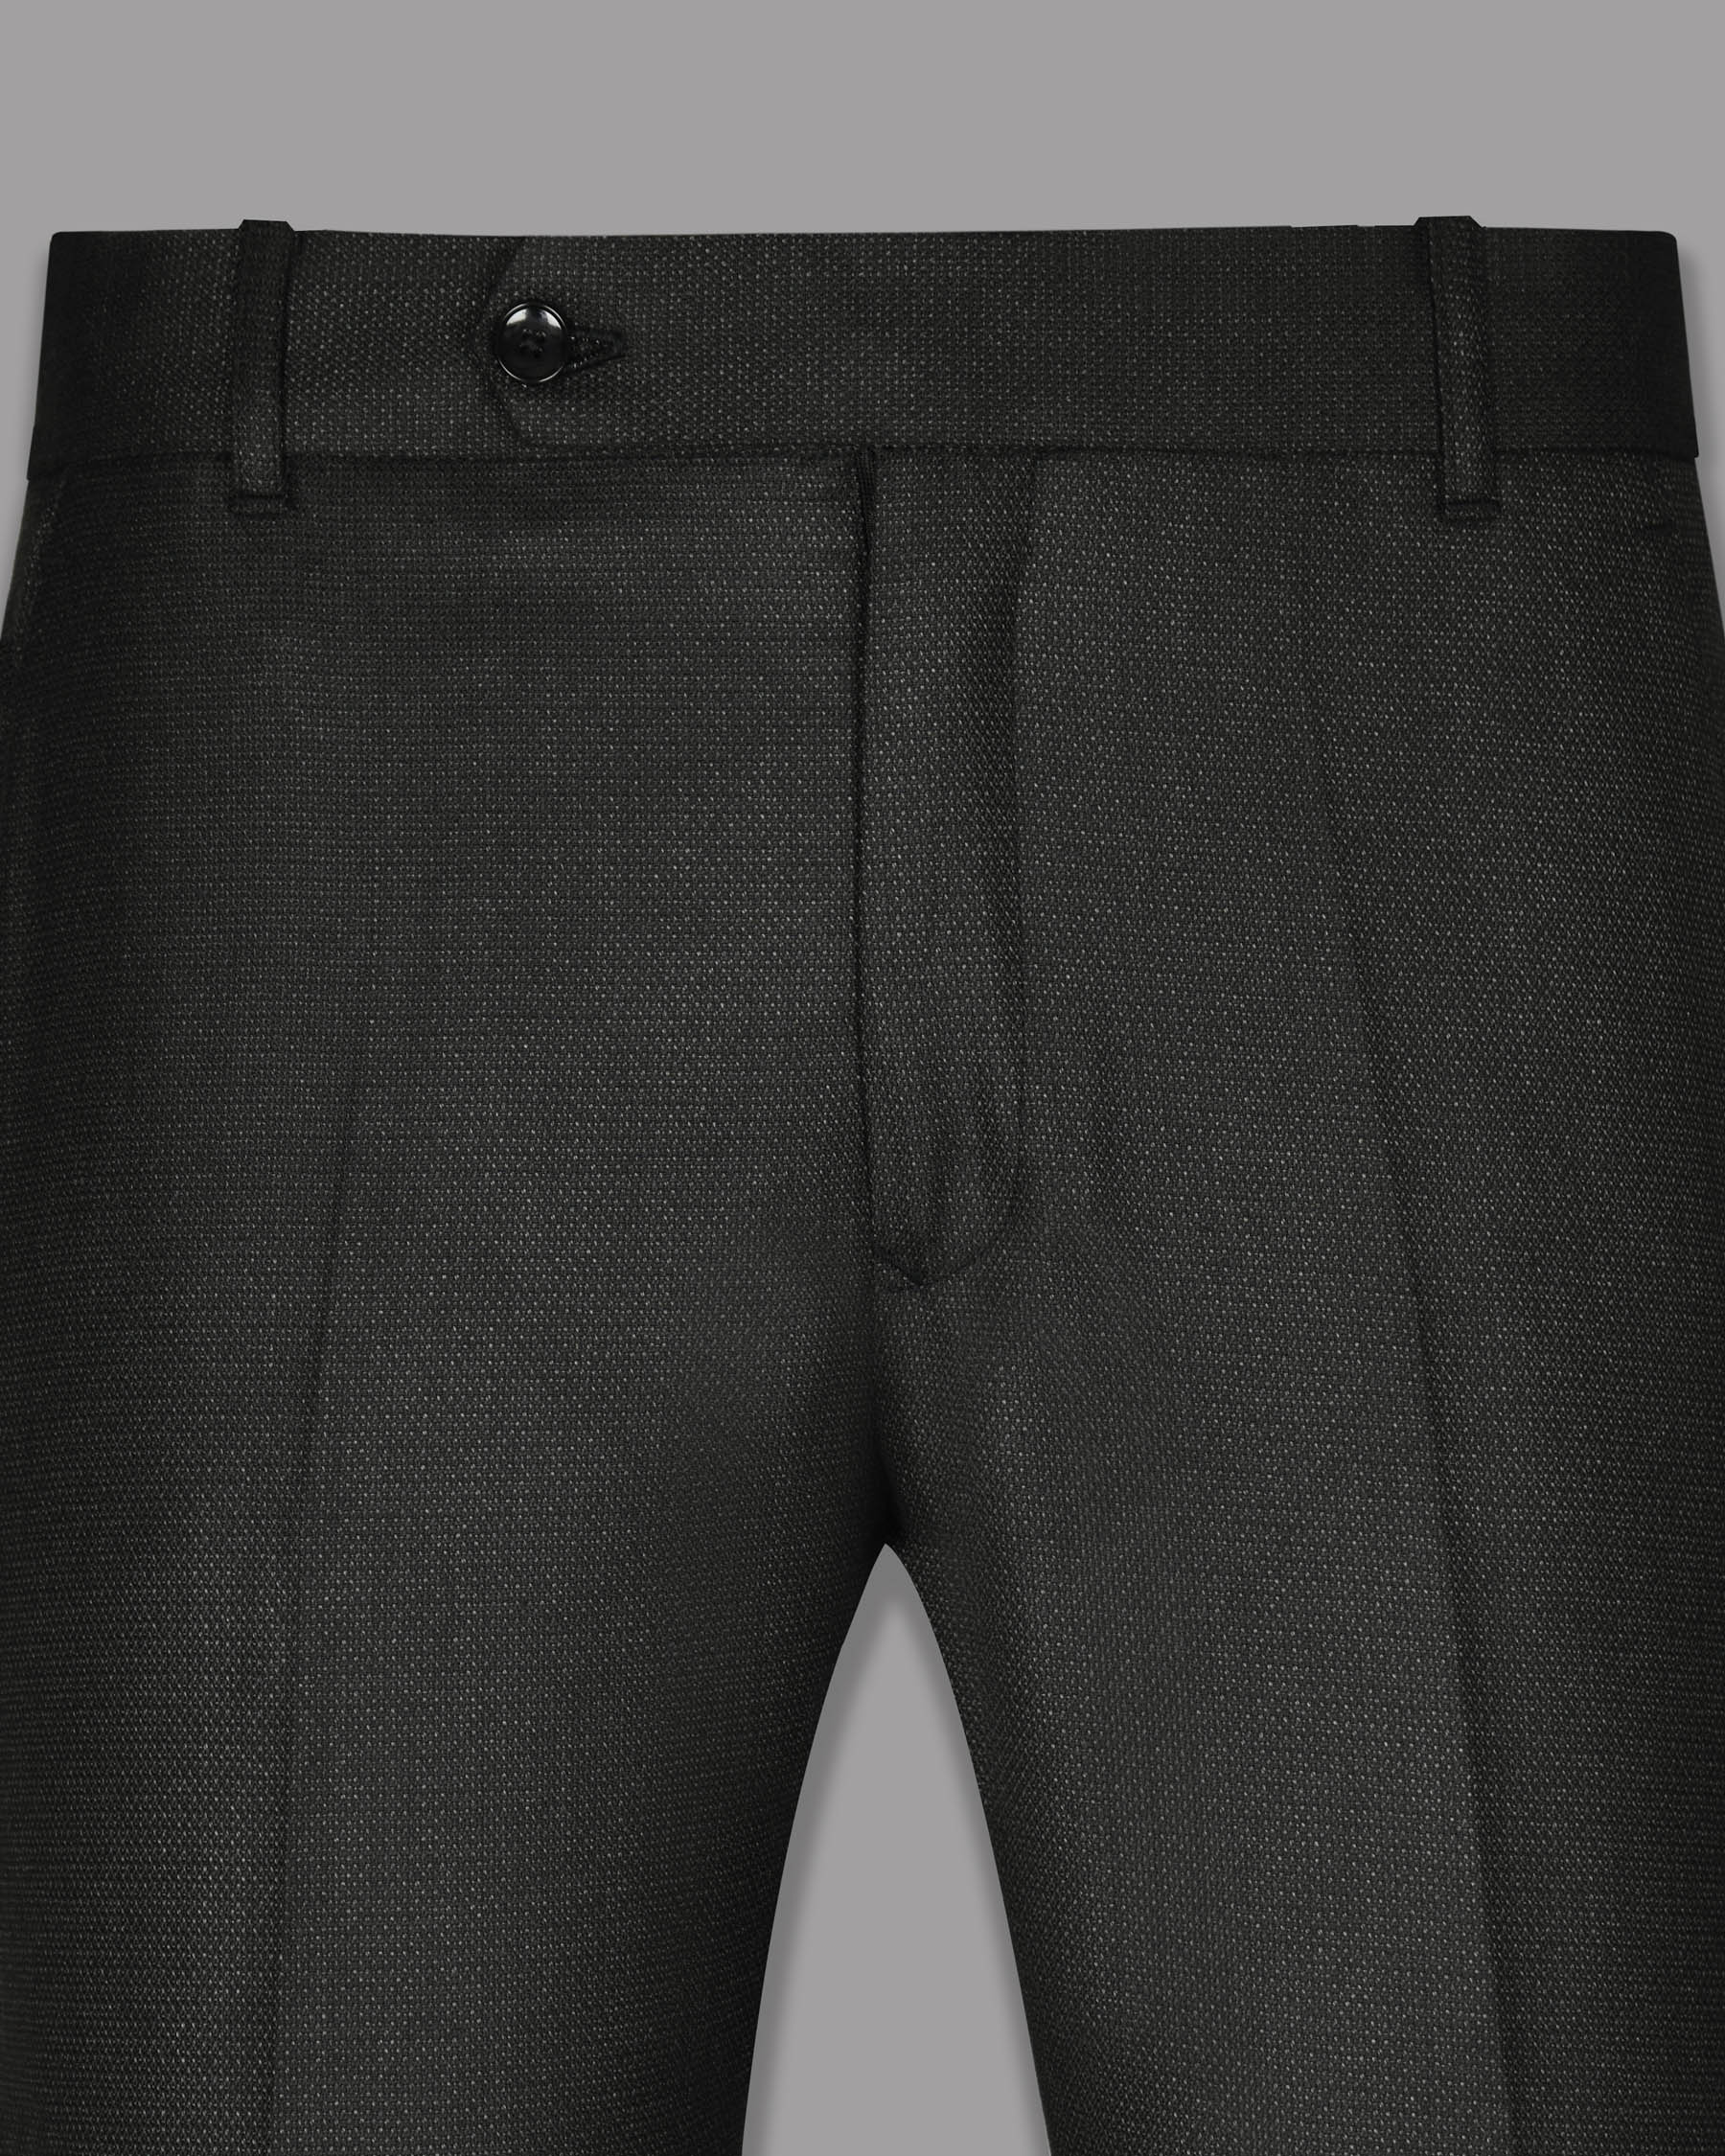 Jade Black with Subtle Grey texture Wool-Silk blend Pant T808-42, T808-36, T808-40, T808-30, T808-44, T808-32, T808-34, T808-28, T808-38